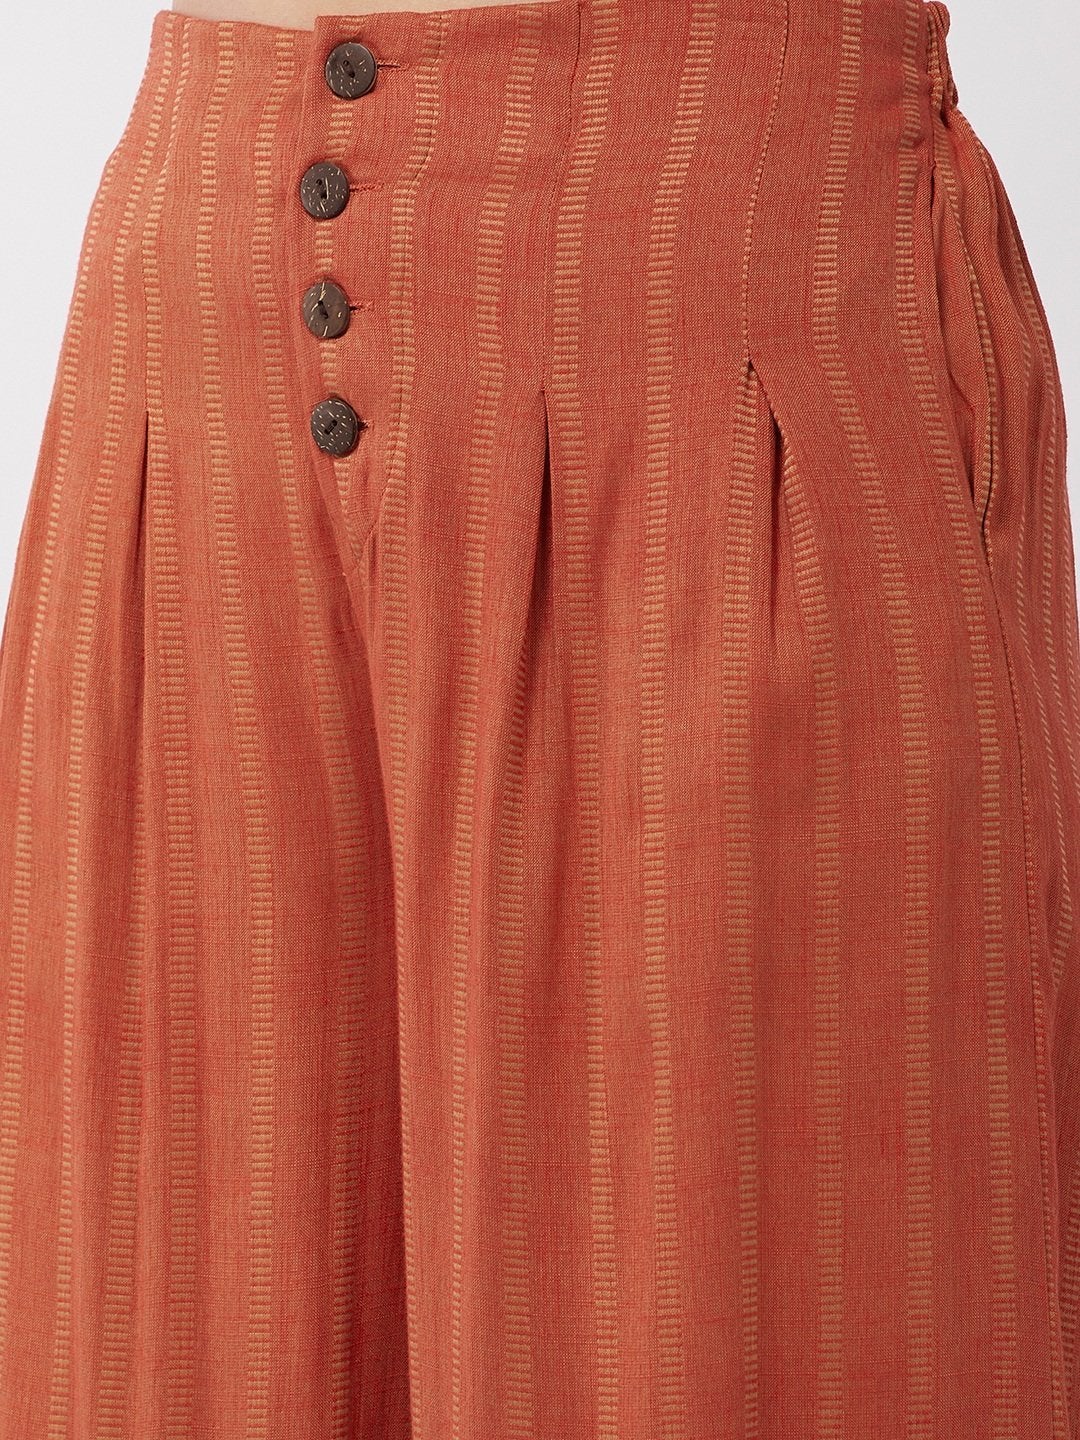 Women's Marmalade Orange Culottes - InWeave